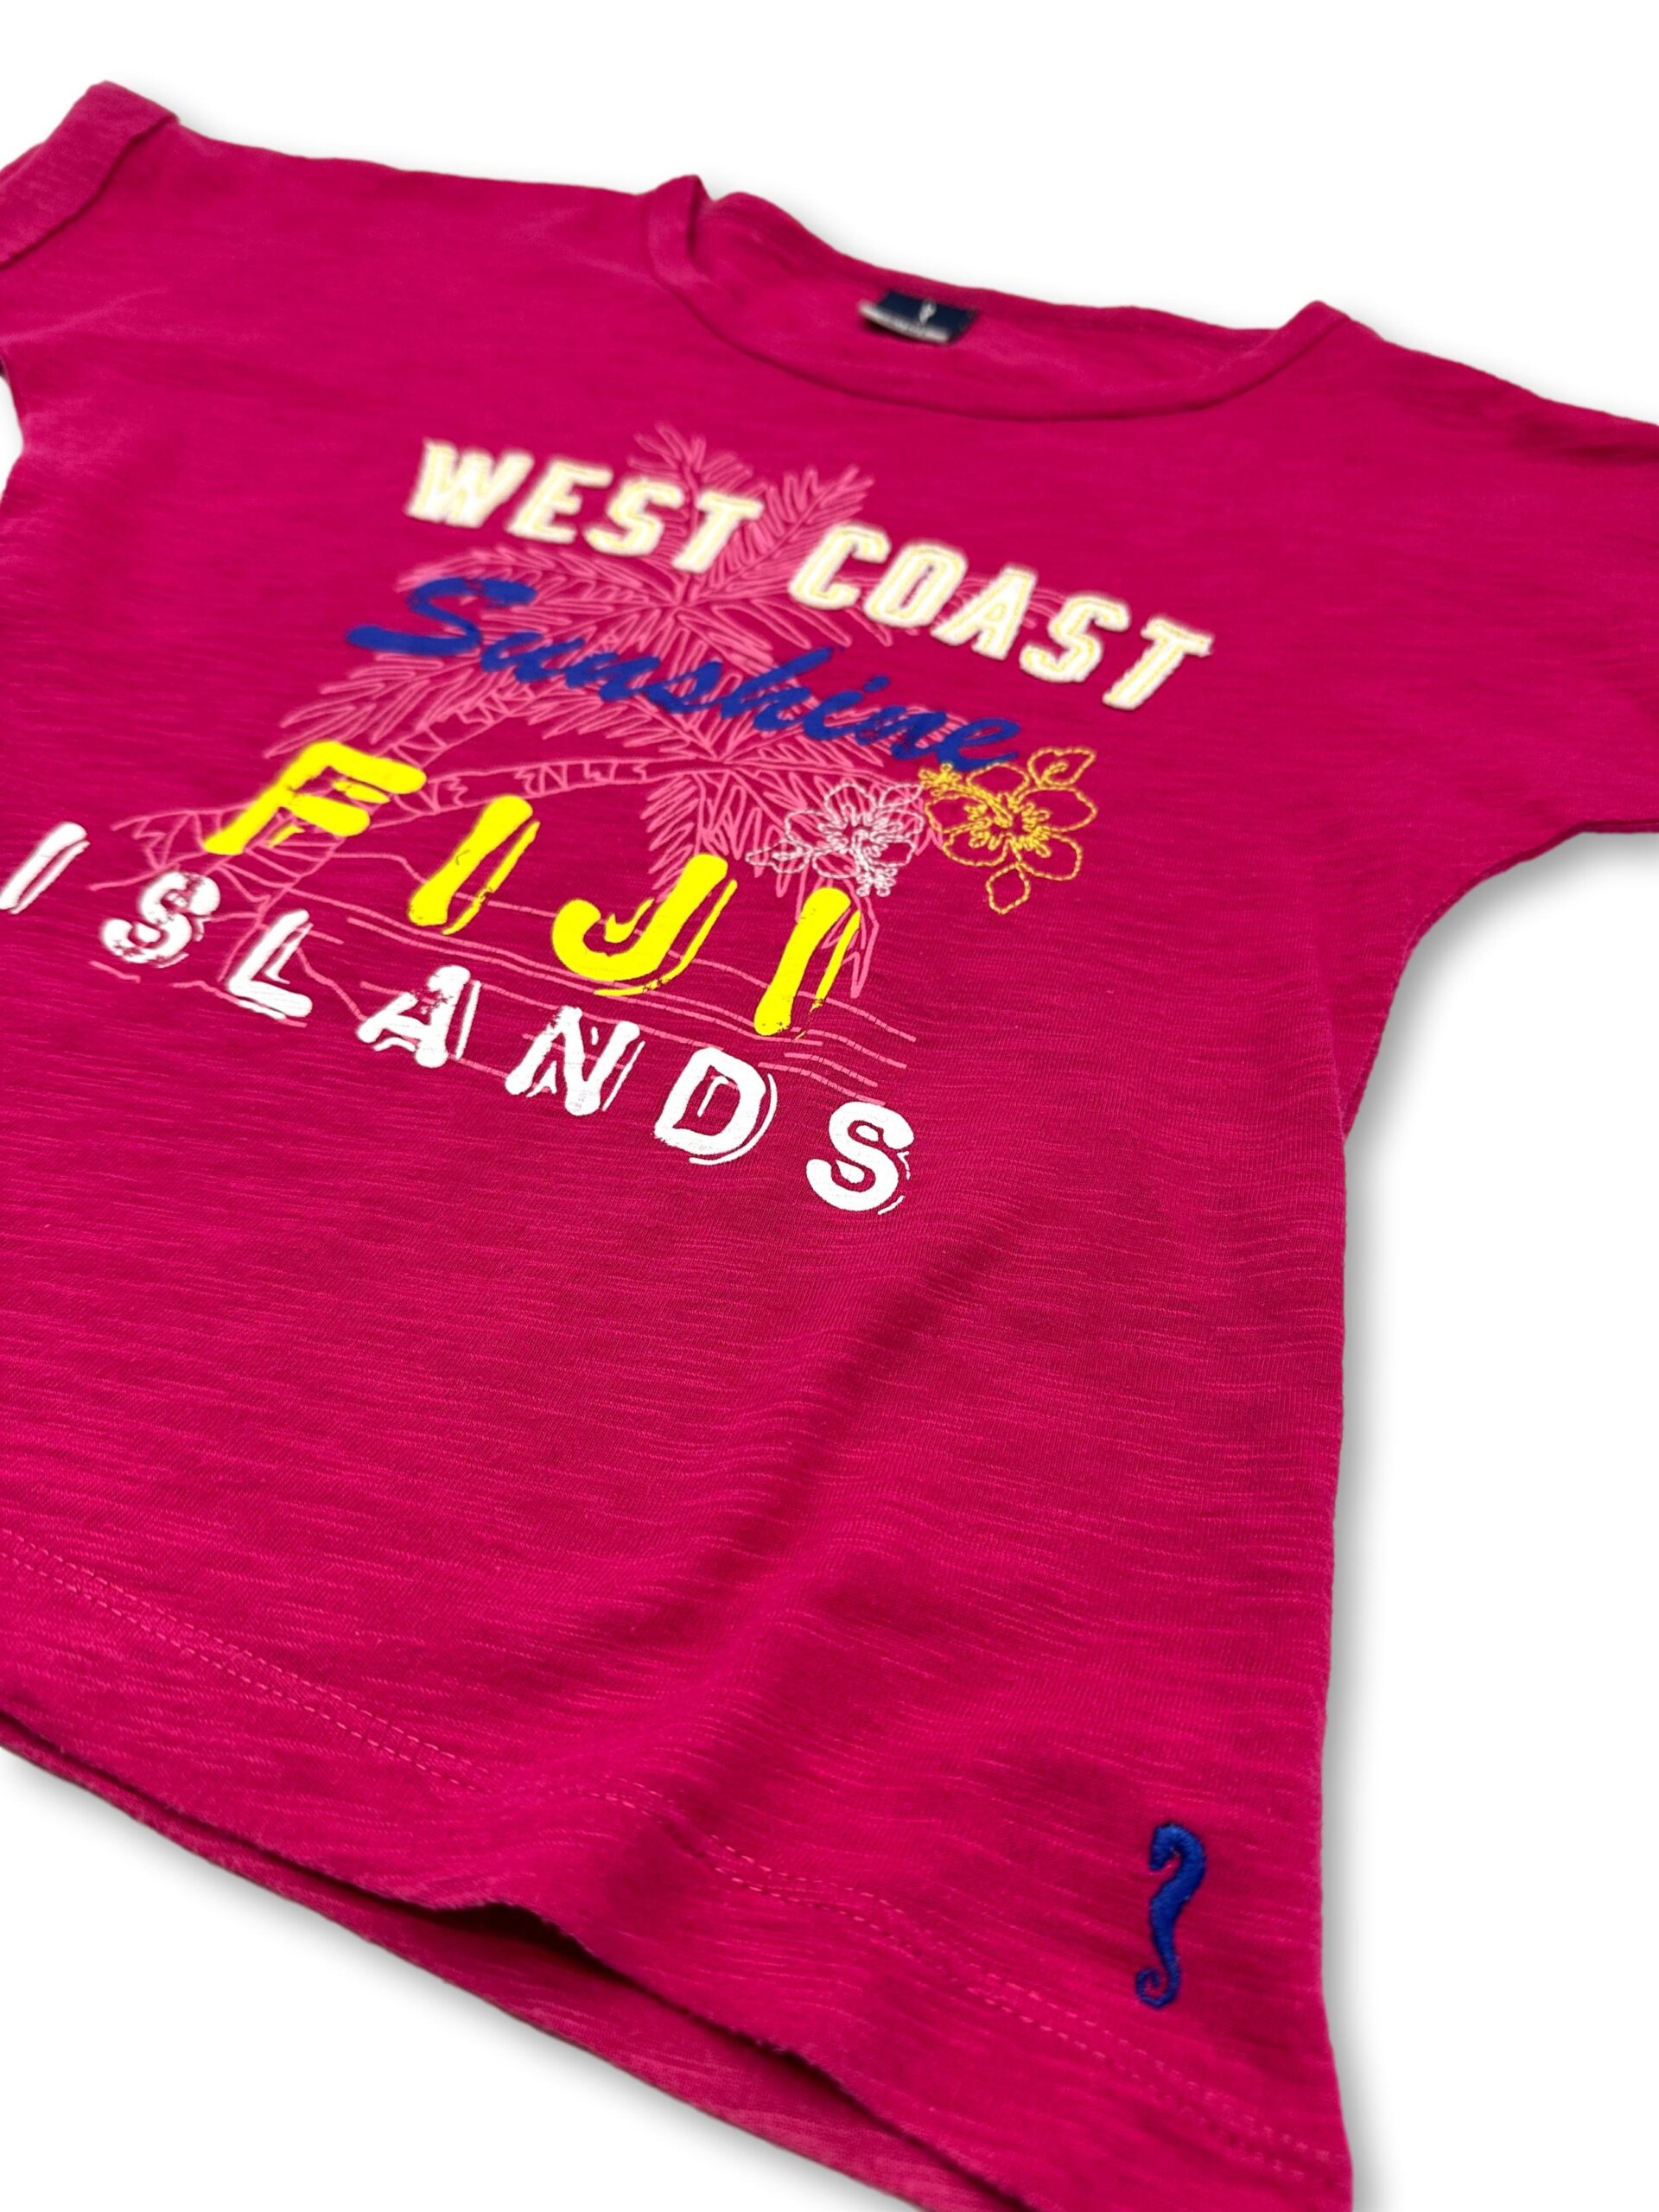 Tshirt West Coast Rosa 5 Anos – LANIDOR